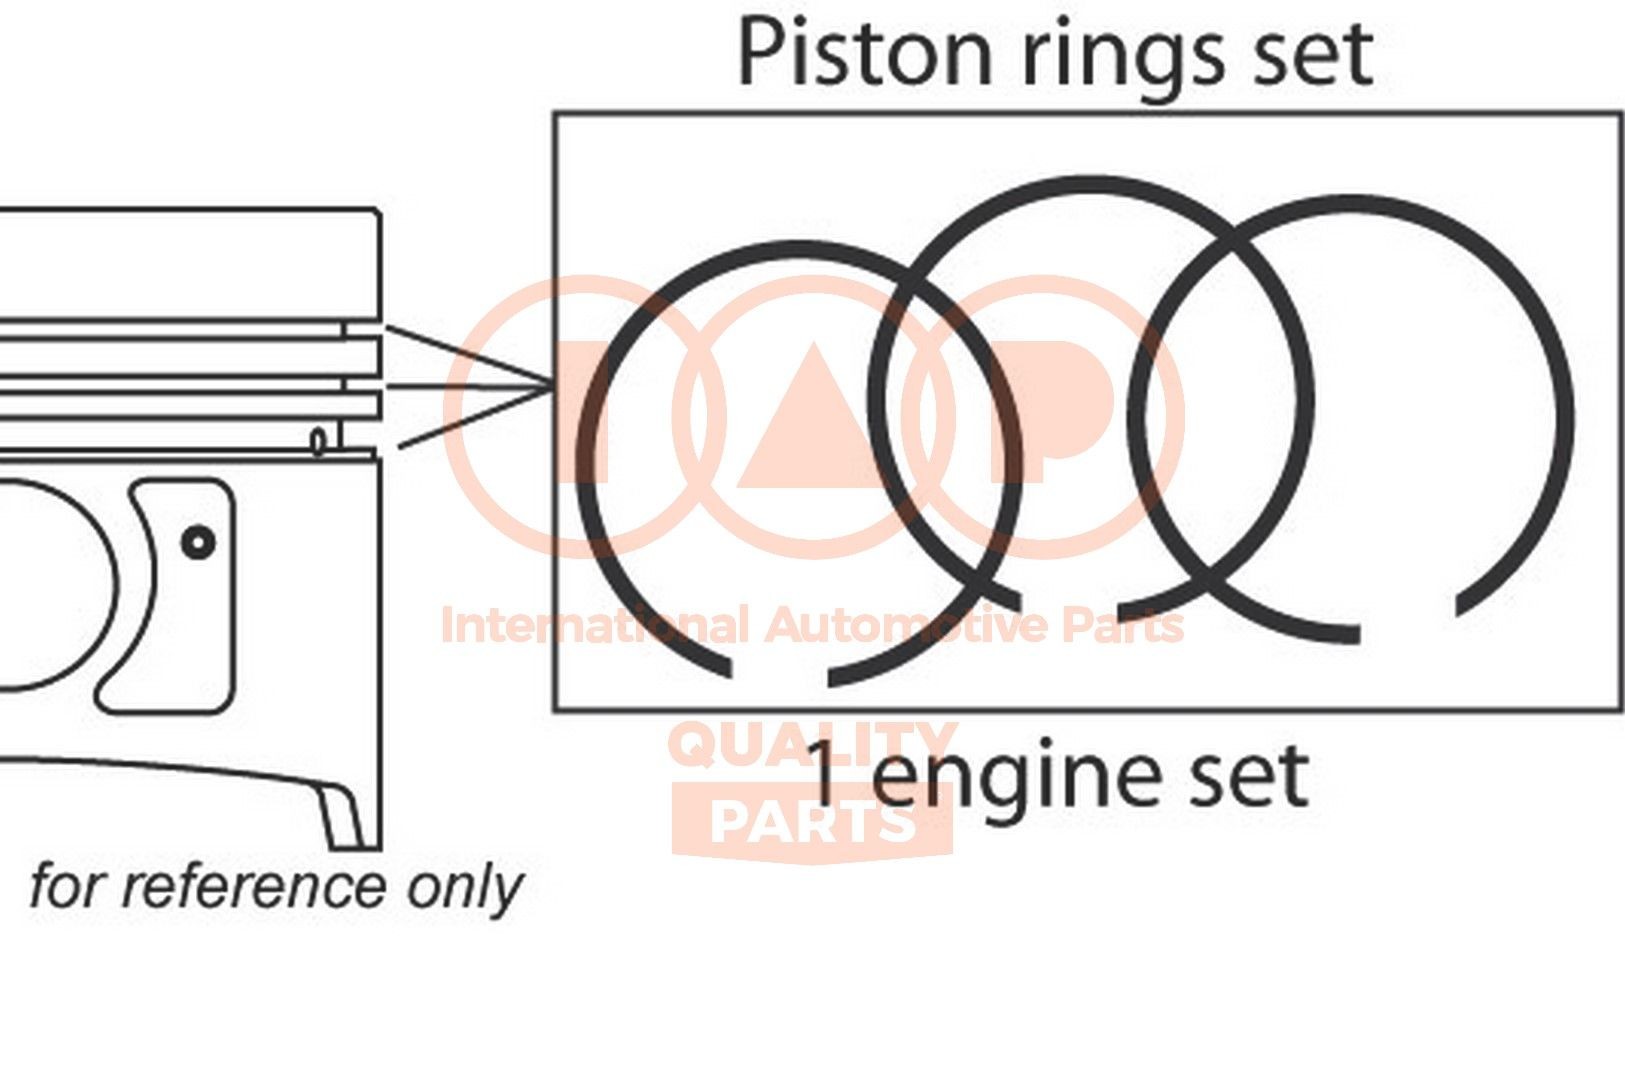 IAP QUALITY PARTS 102-06019 HONDA HR-V 2018 Piston ring kit